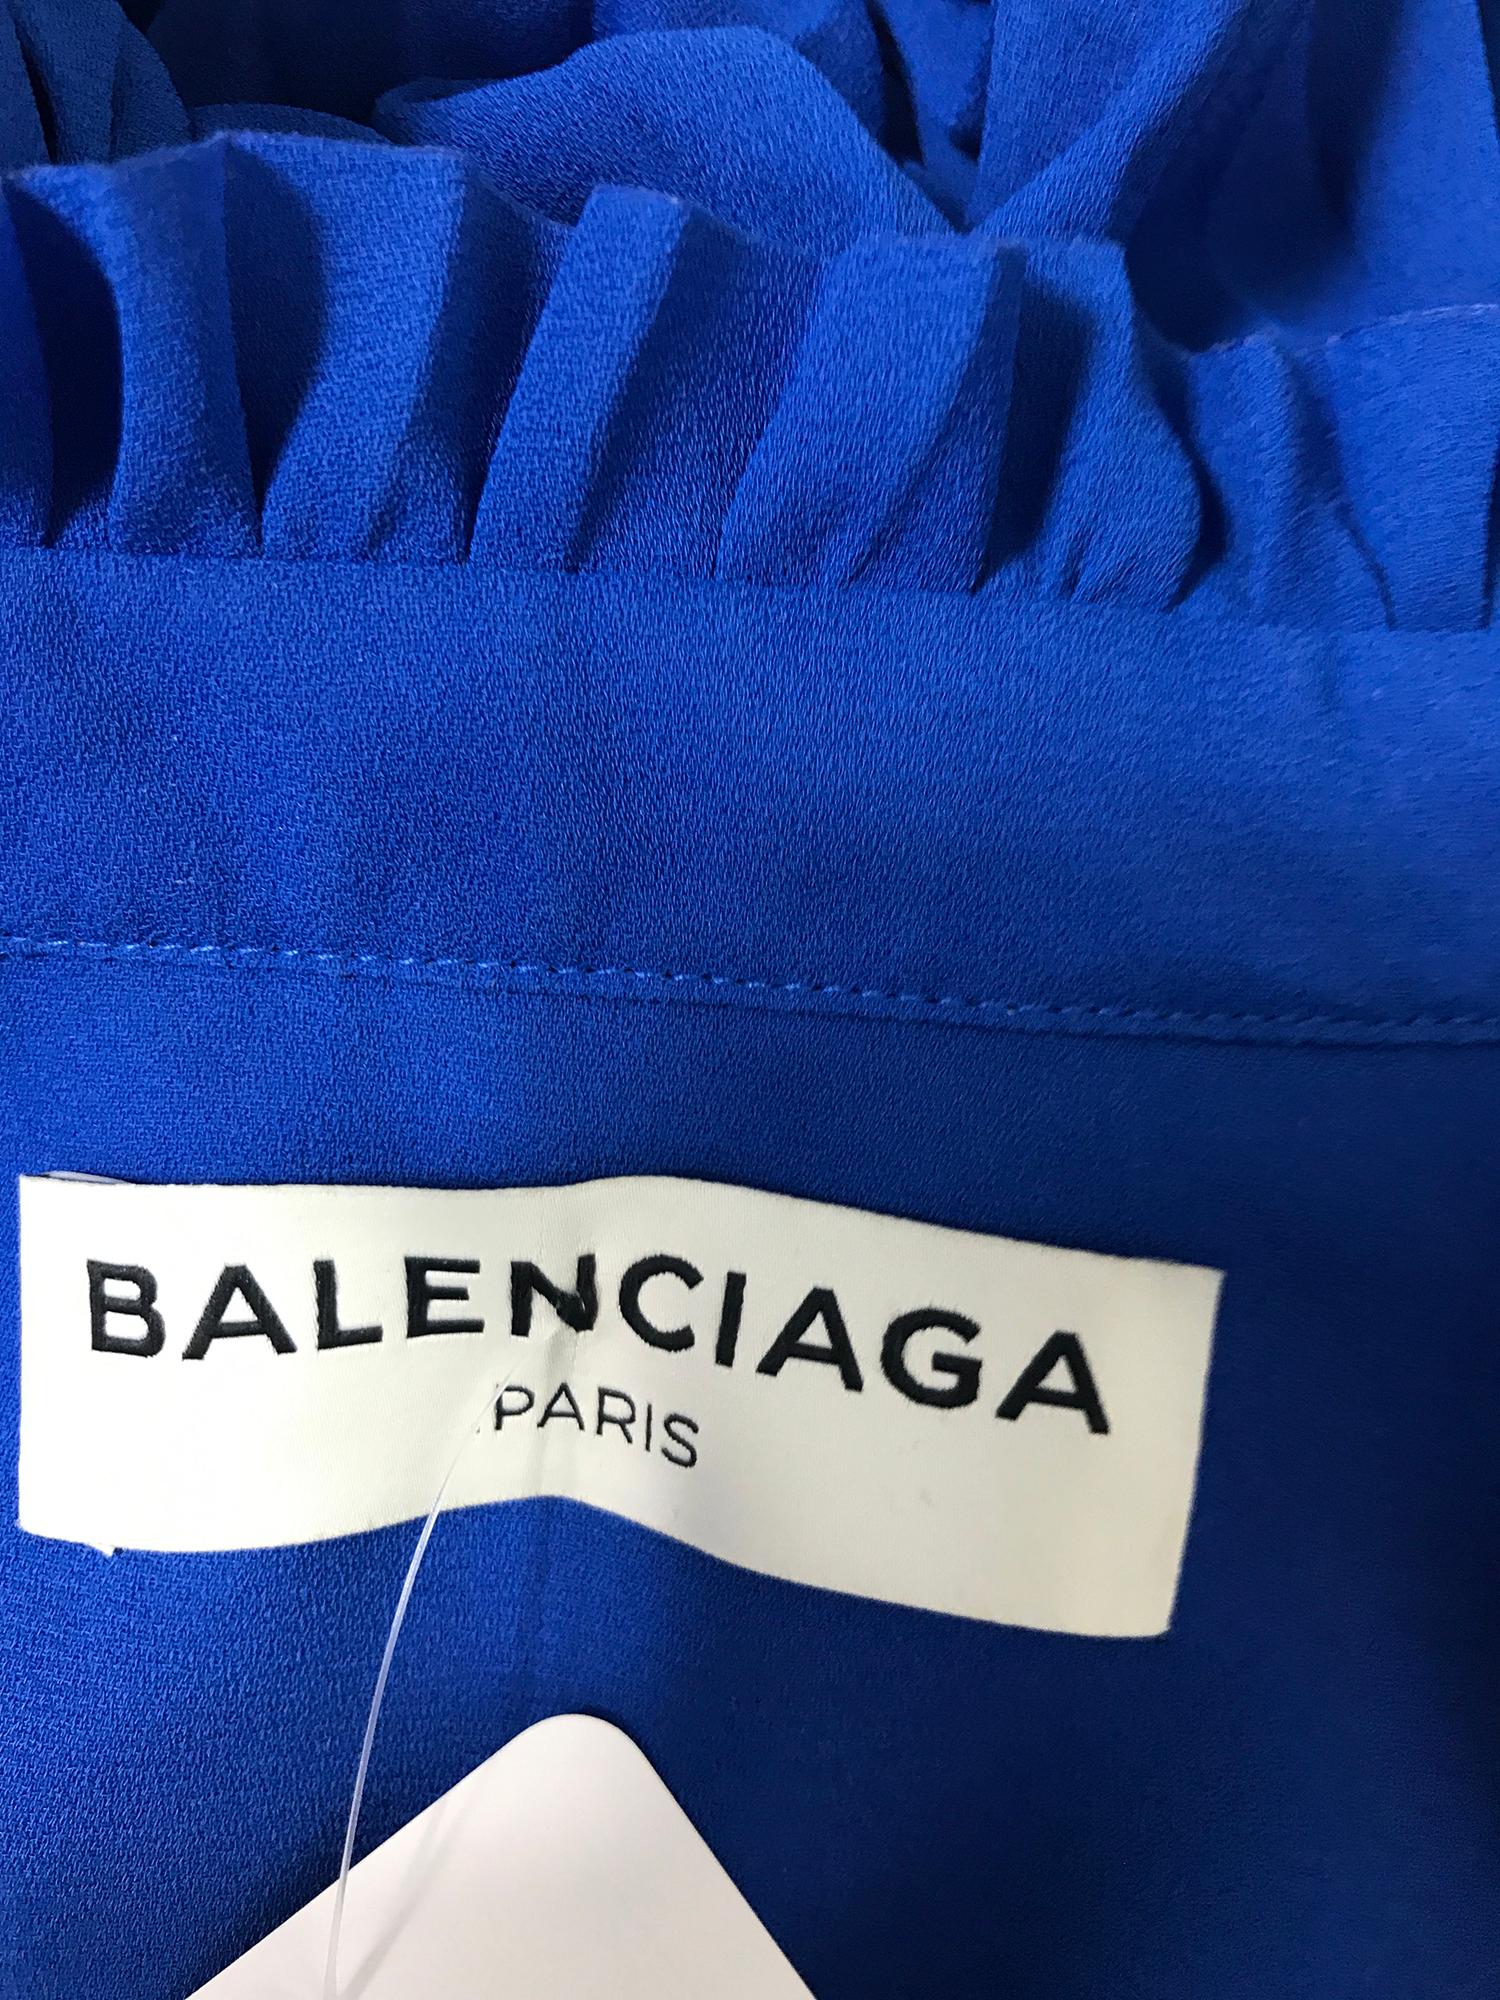 Balenciaga Resort 2017 Multi Style Royal Blue Pleated Tunic Blouse 42 6